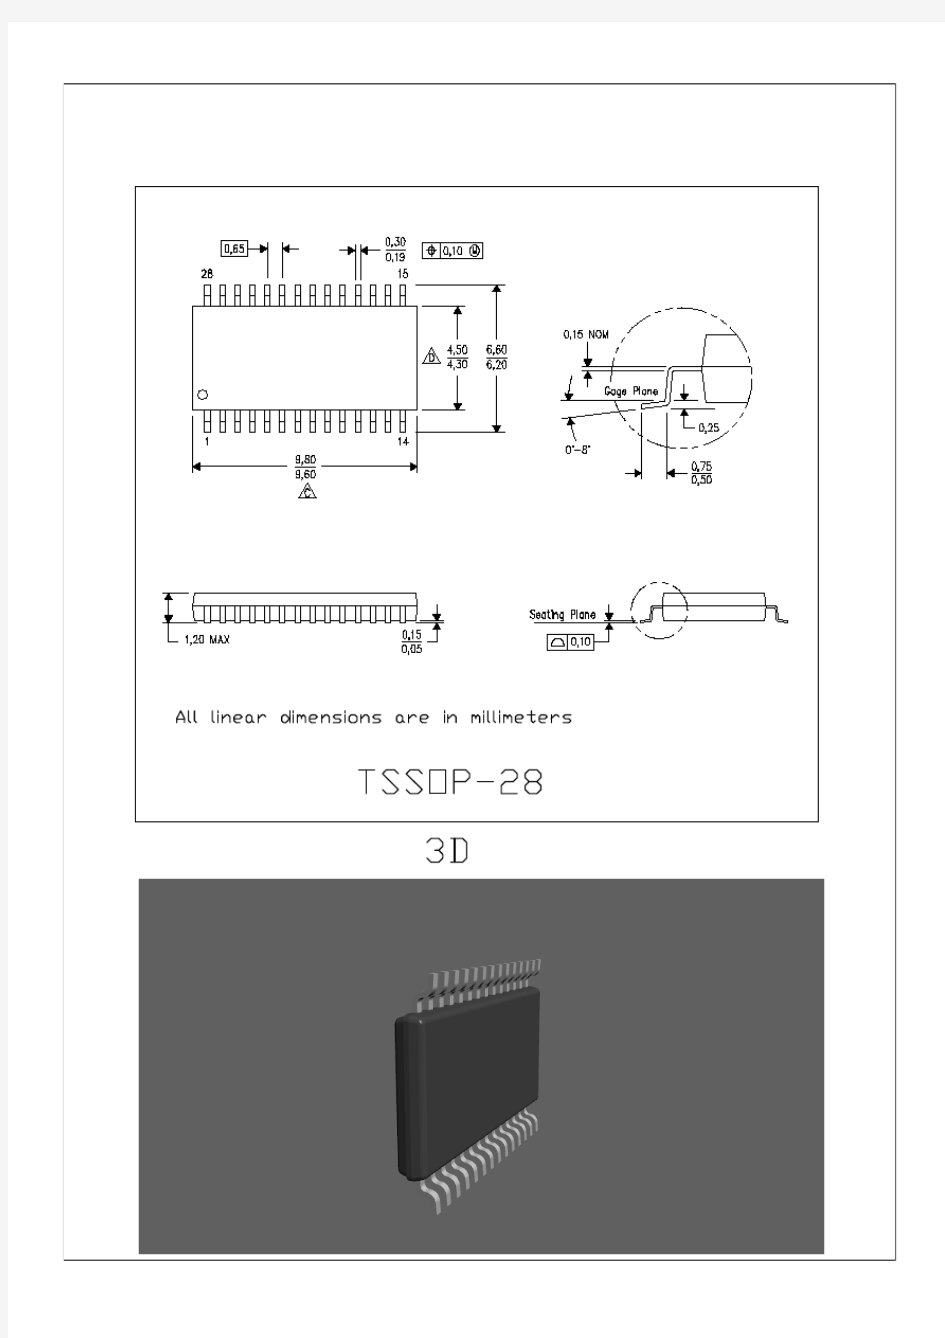 Tssop-28封装 尺寸  3D模型 在adobe 中可以动